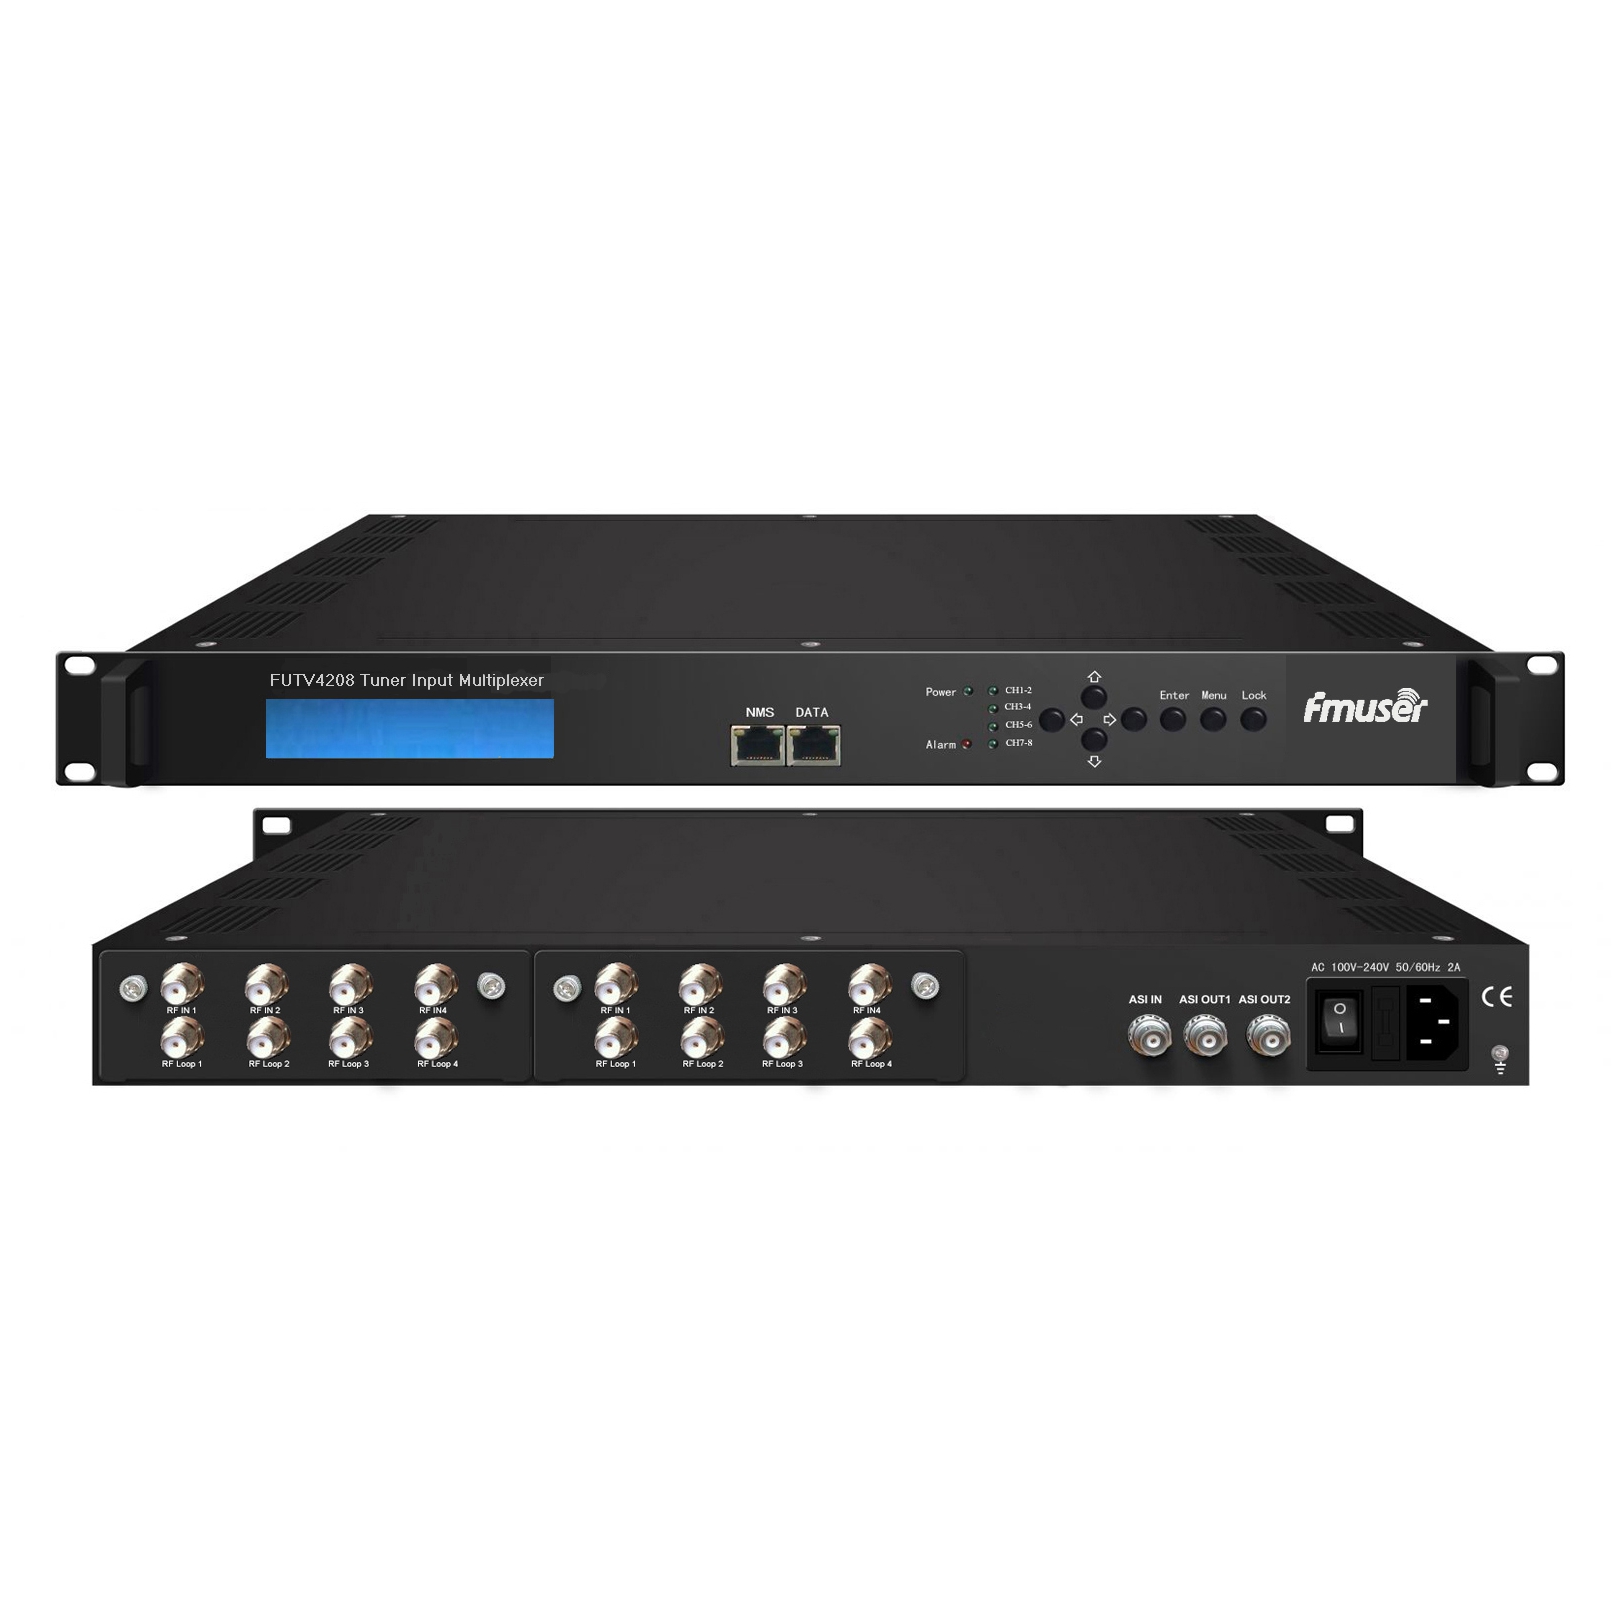 FMUSER FUTV4208 8 Tuner IRD (8 DVB-S2 / T RF-ingång, 1 ASI In, 2 ASI 1 IP-utgång) Multiplexer